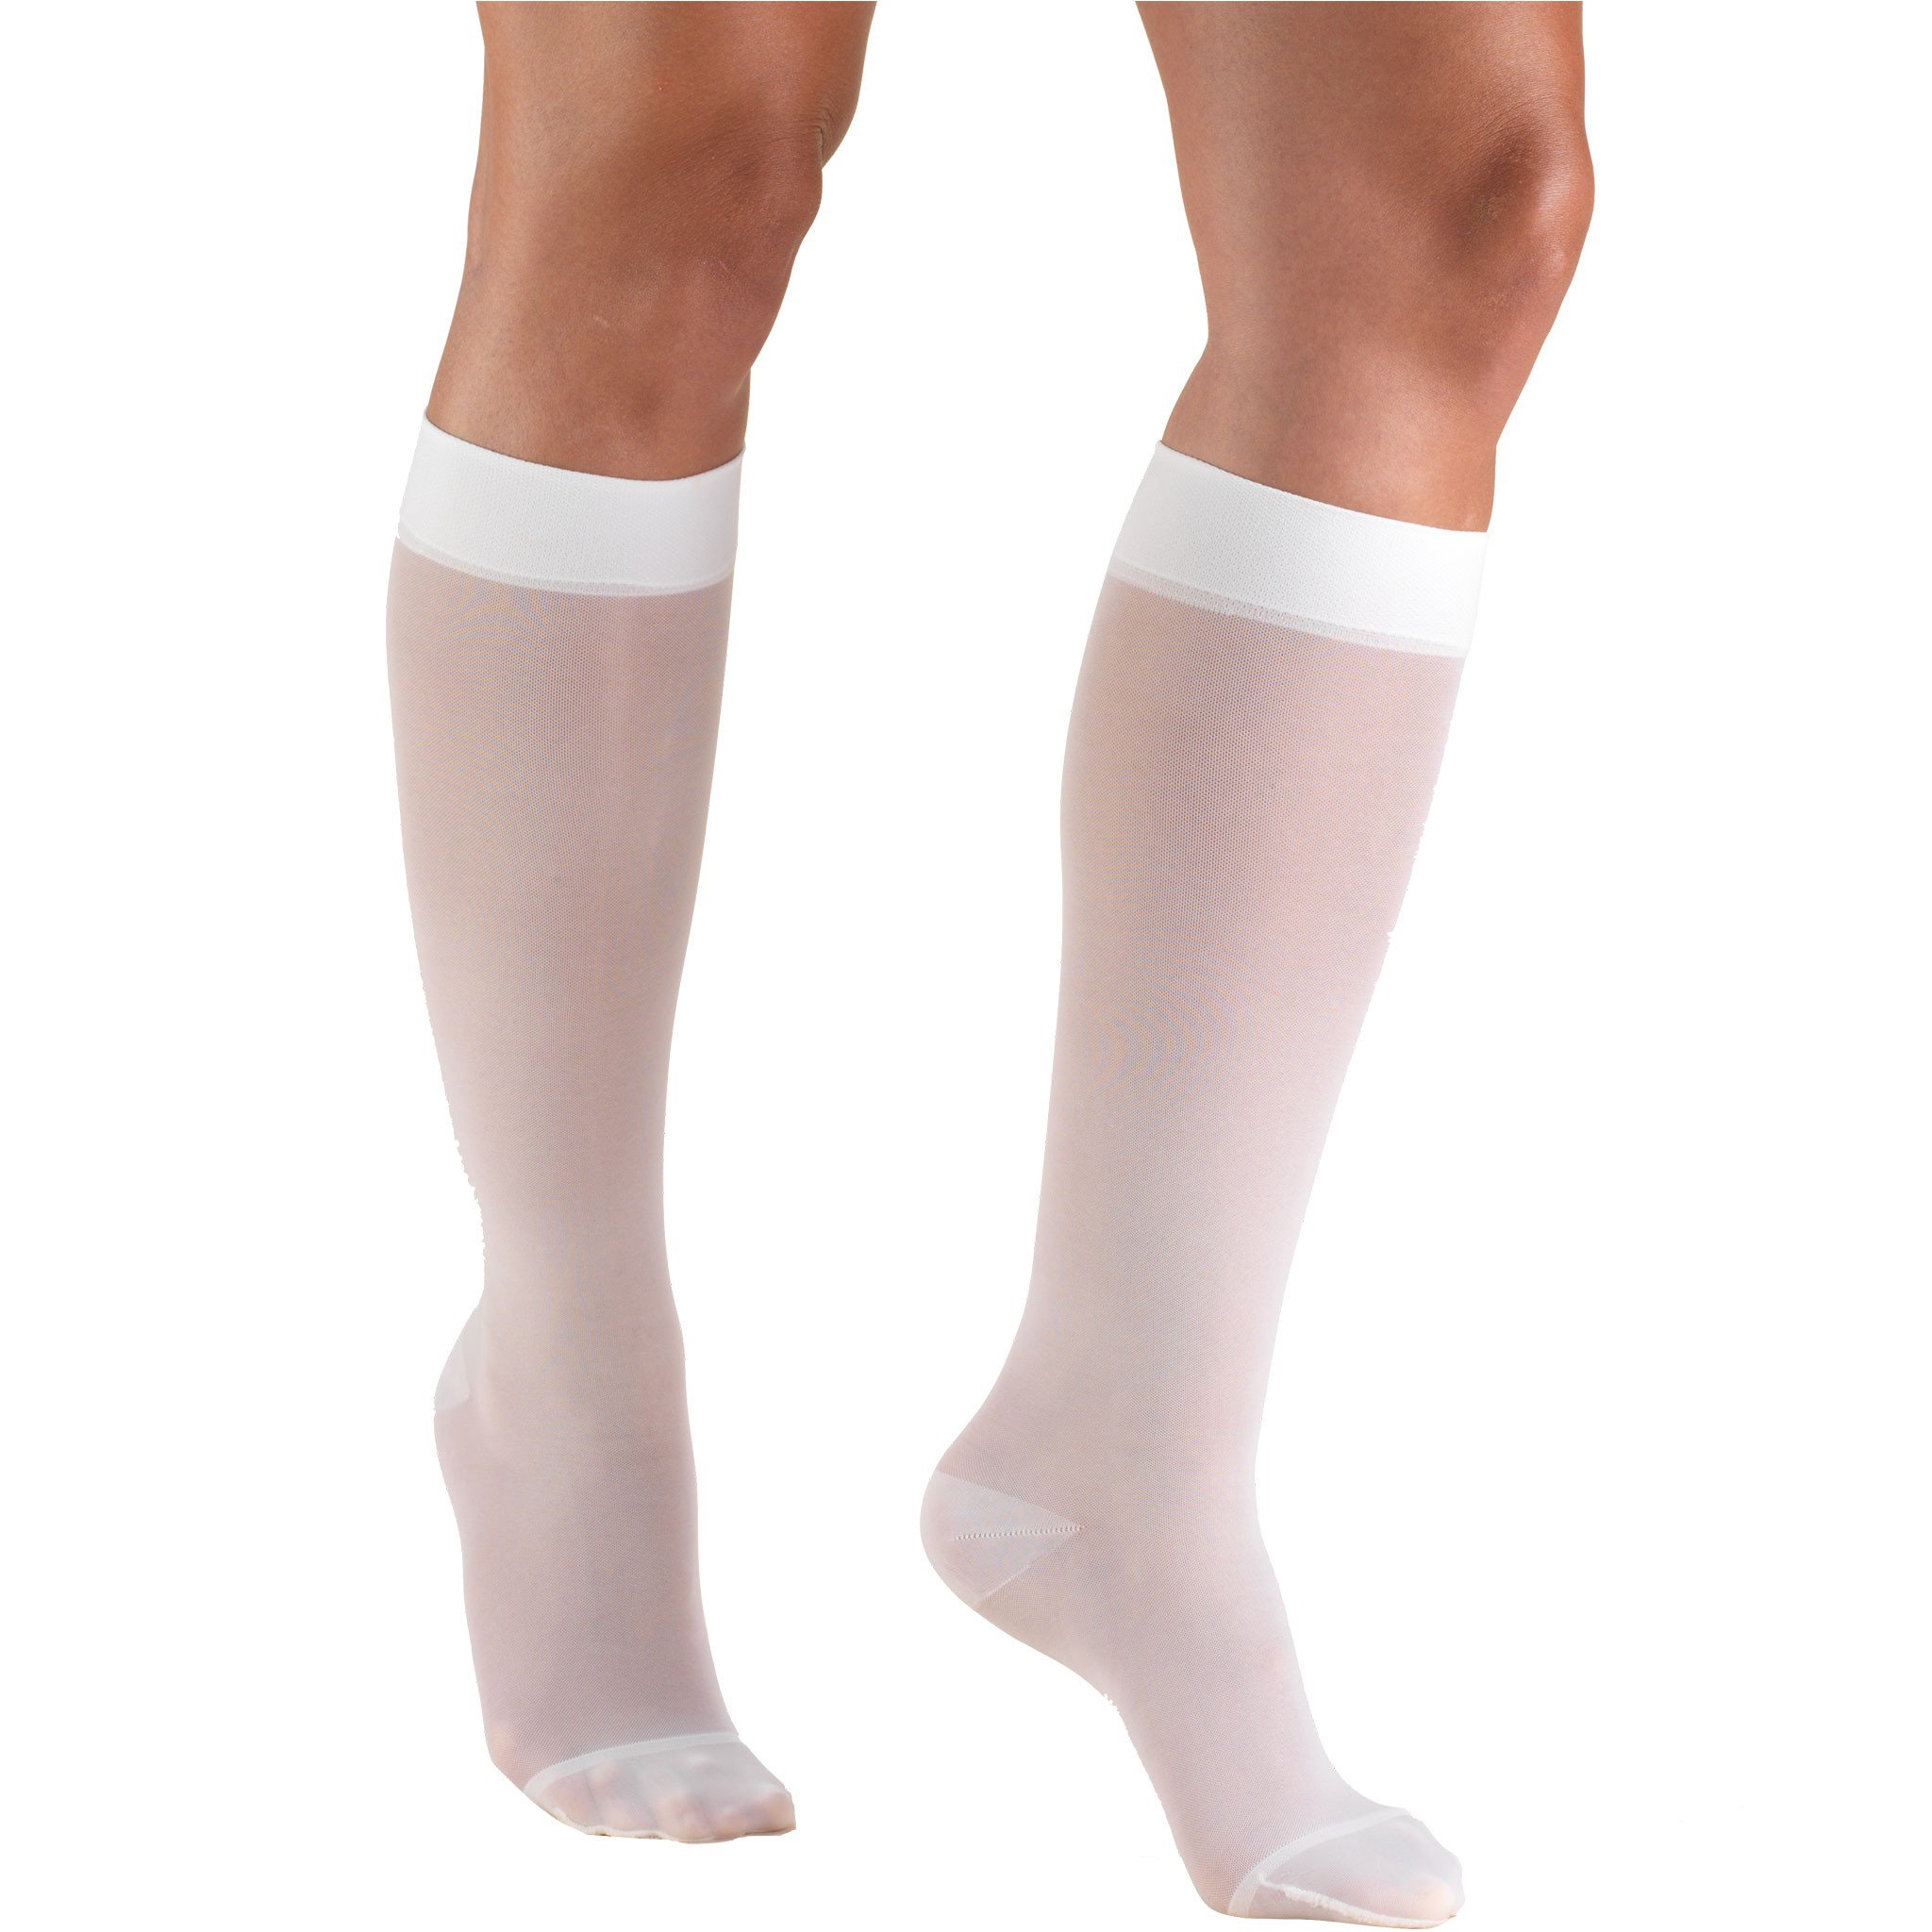 Anti embolism stockings